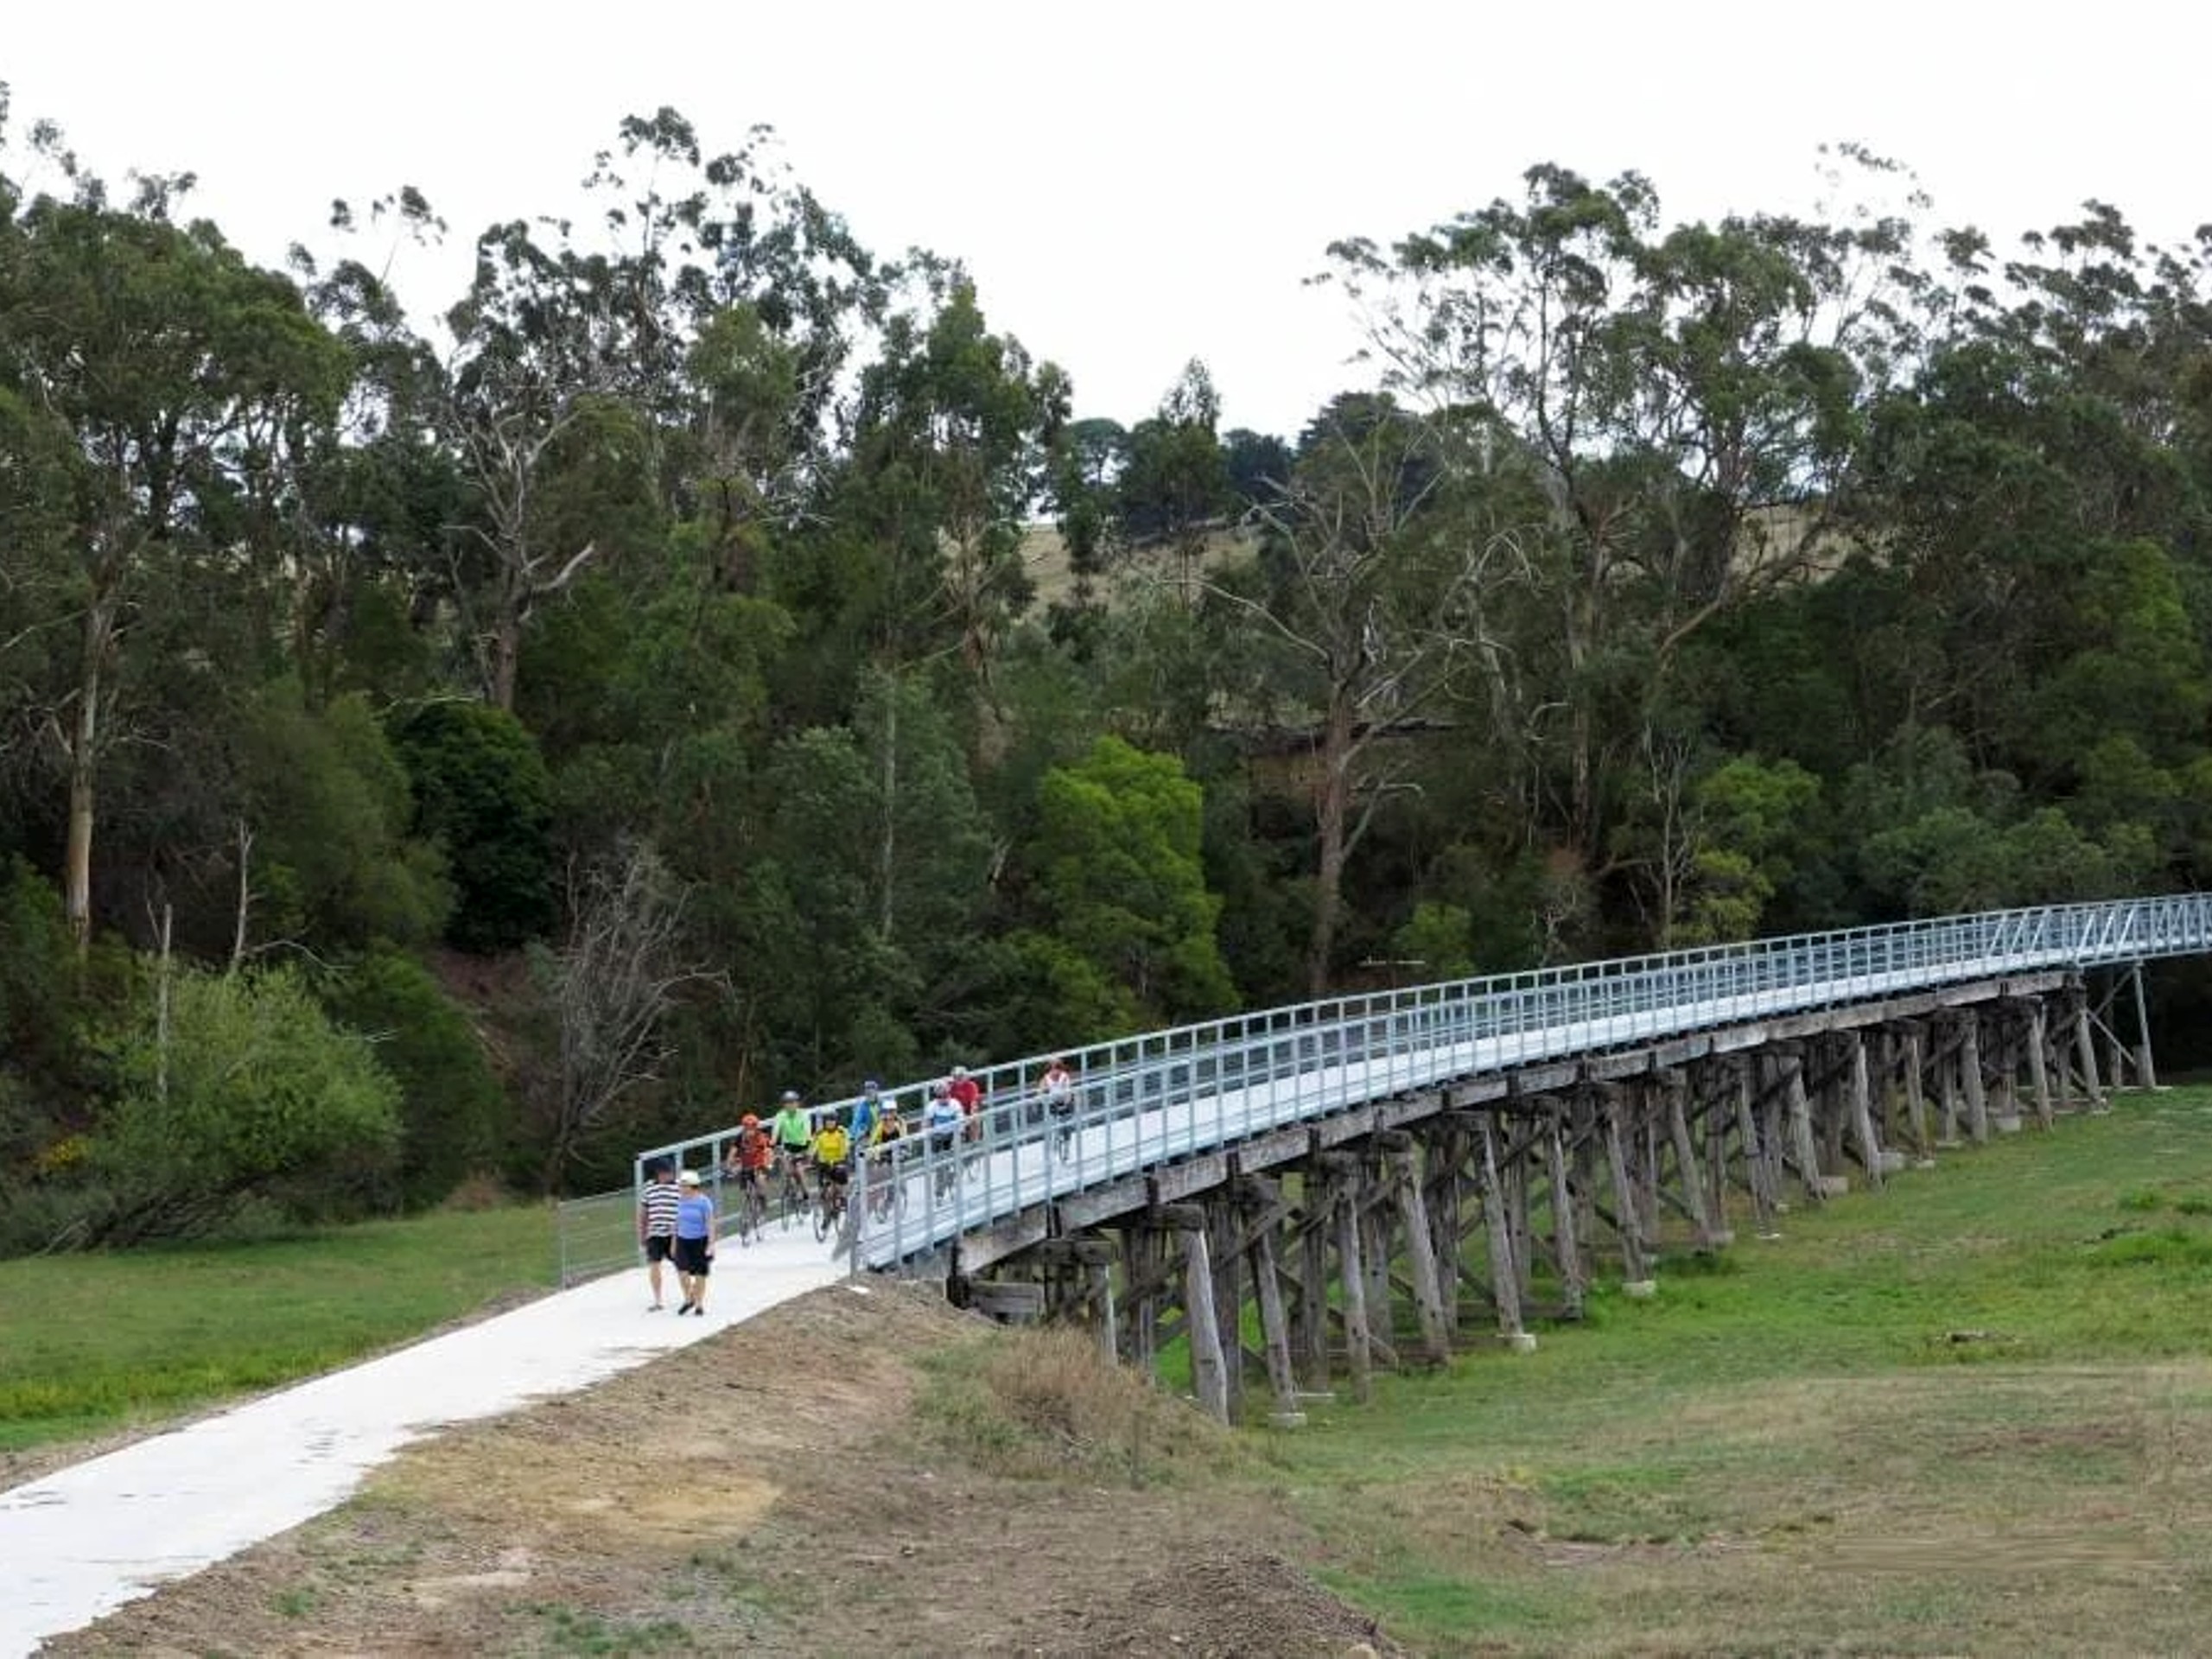 Crossing the Koonwara bridge in Australia